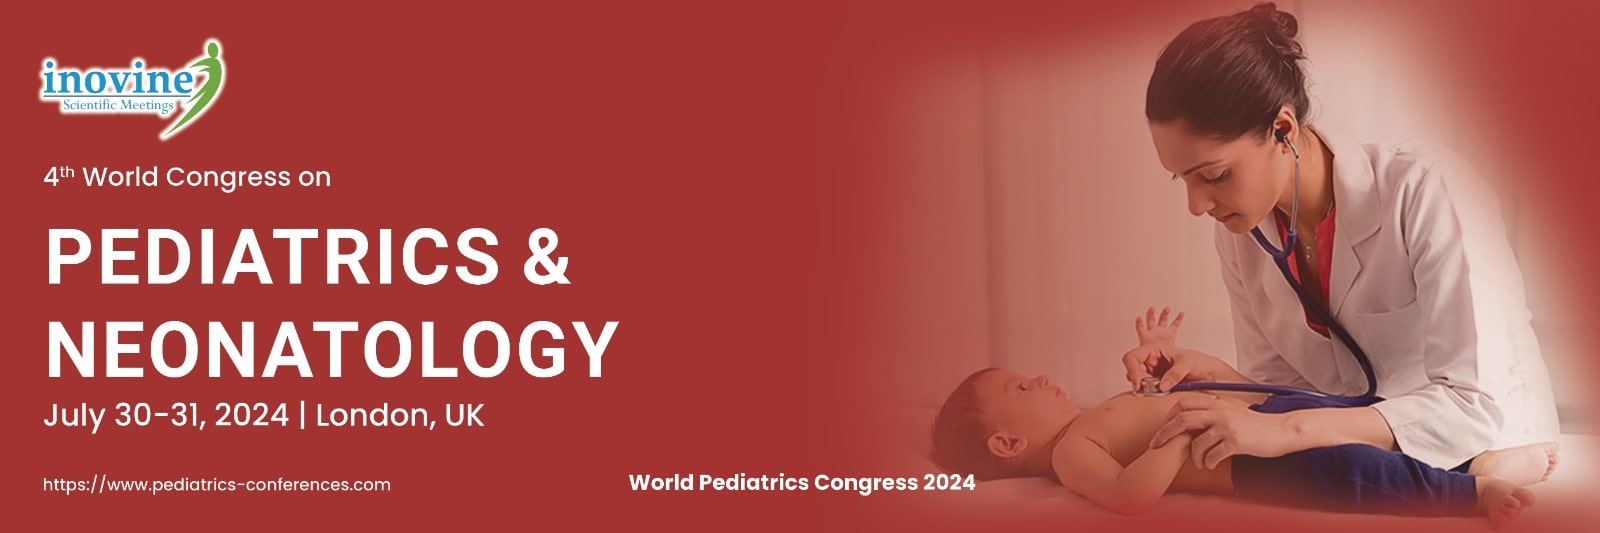 Pediatrics Conferences 2024